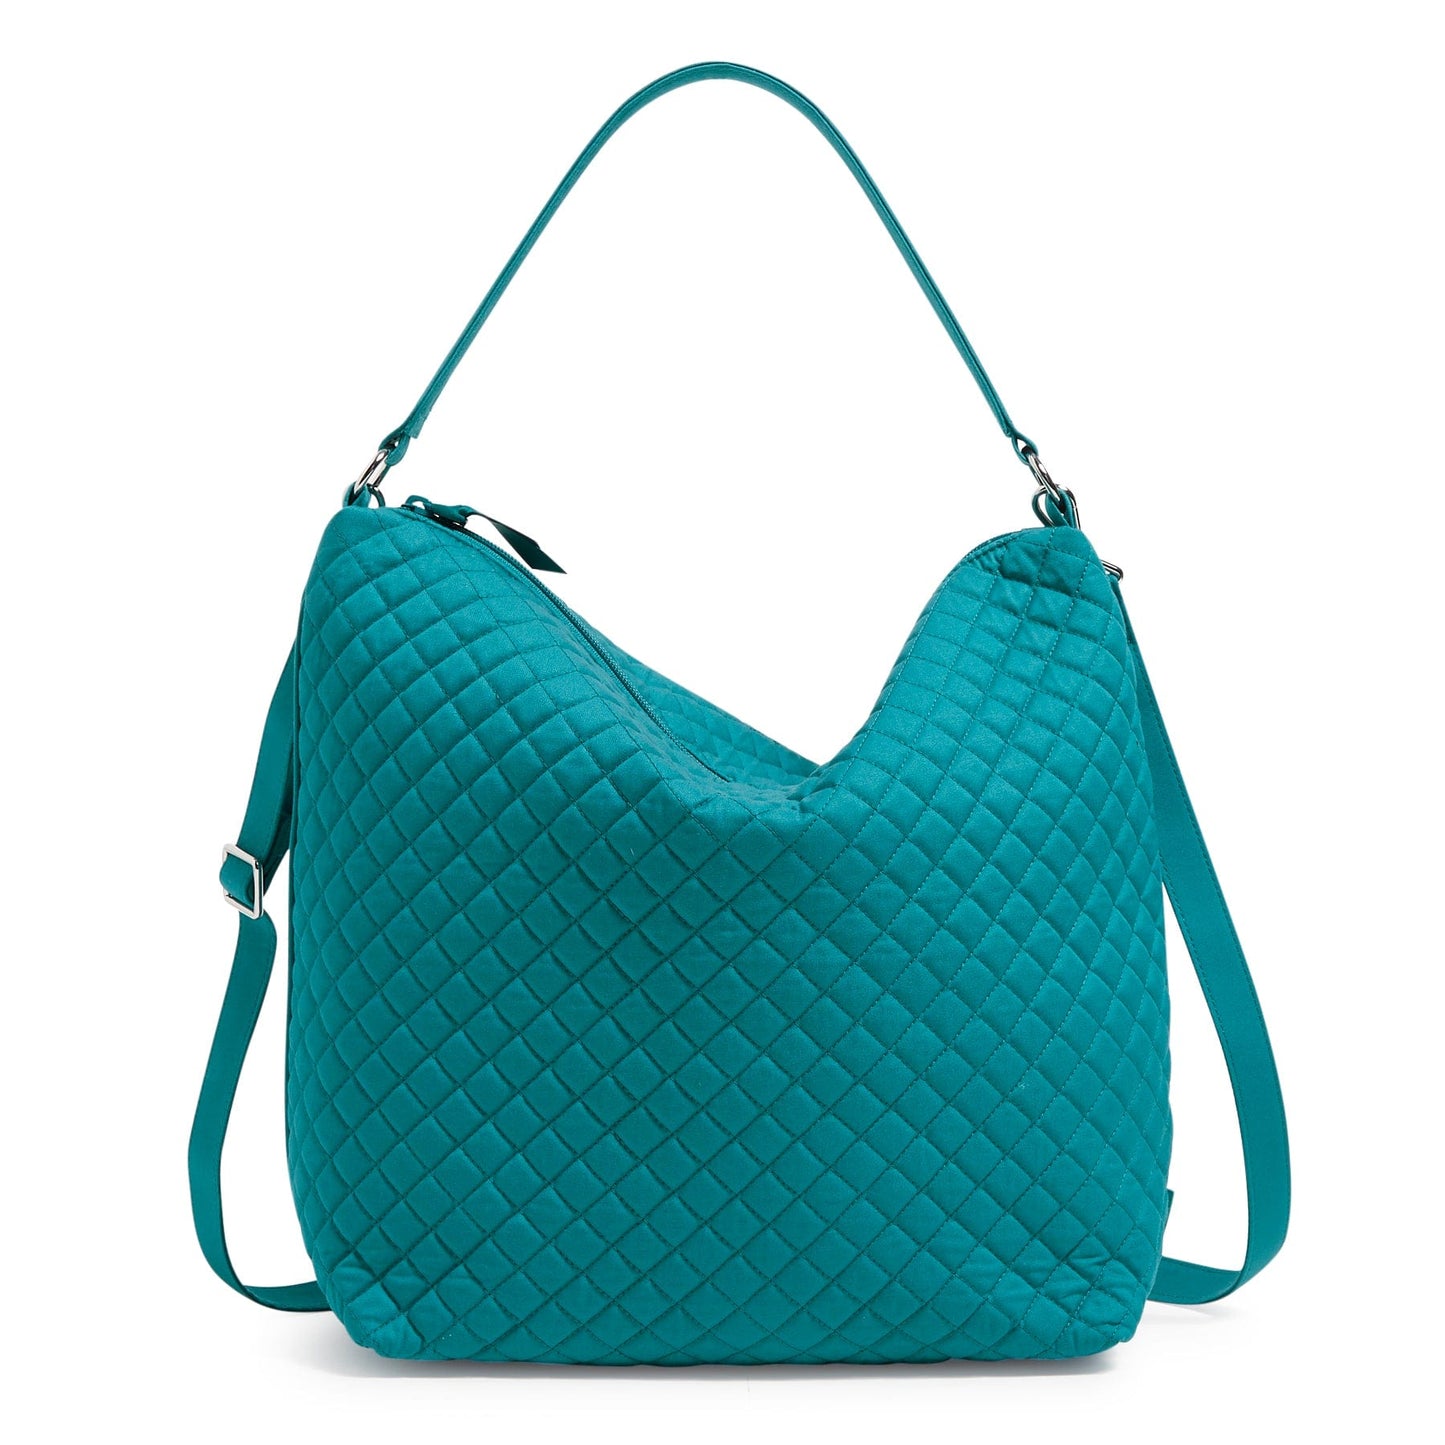 Oversized Hobo Shoulder Bag-Recycled Cotton Forever Green-Image 1-Vera Bradley